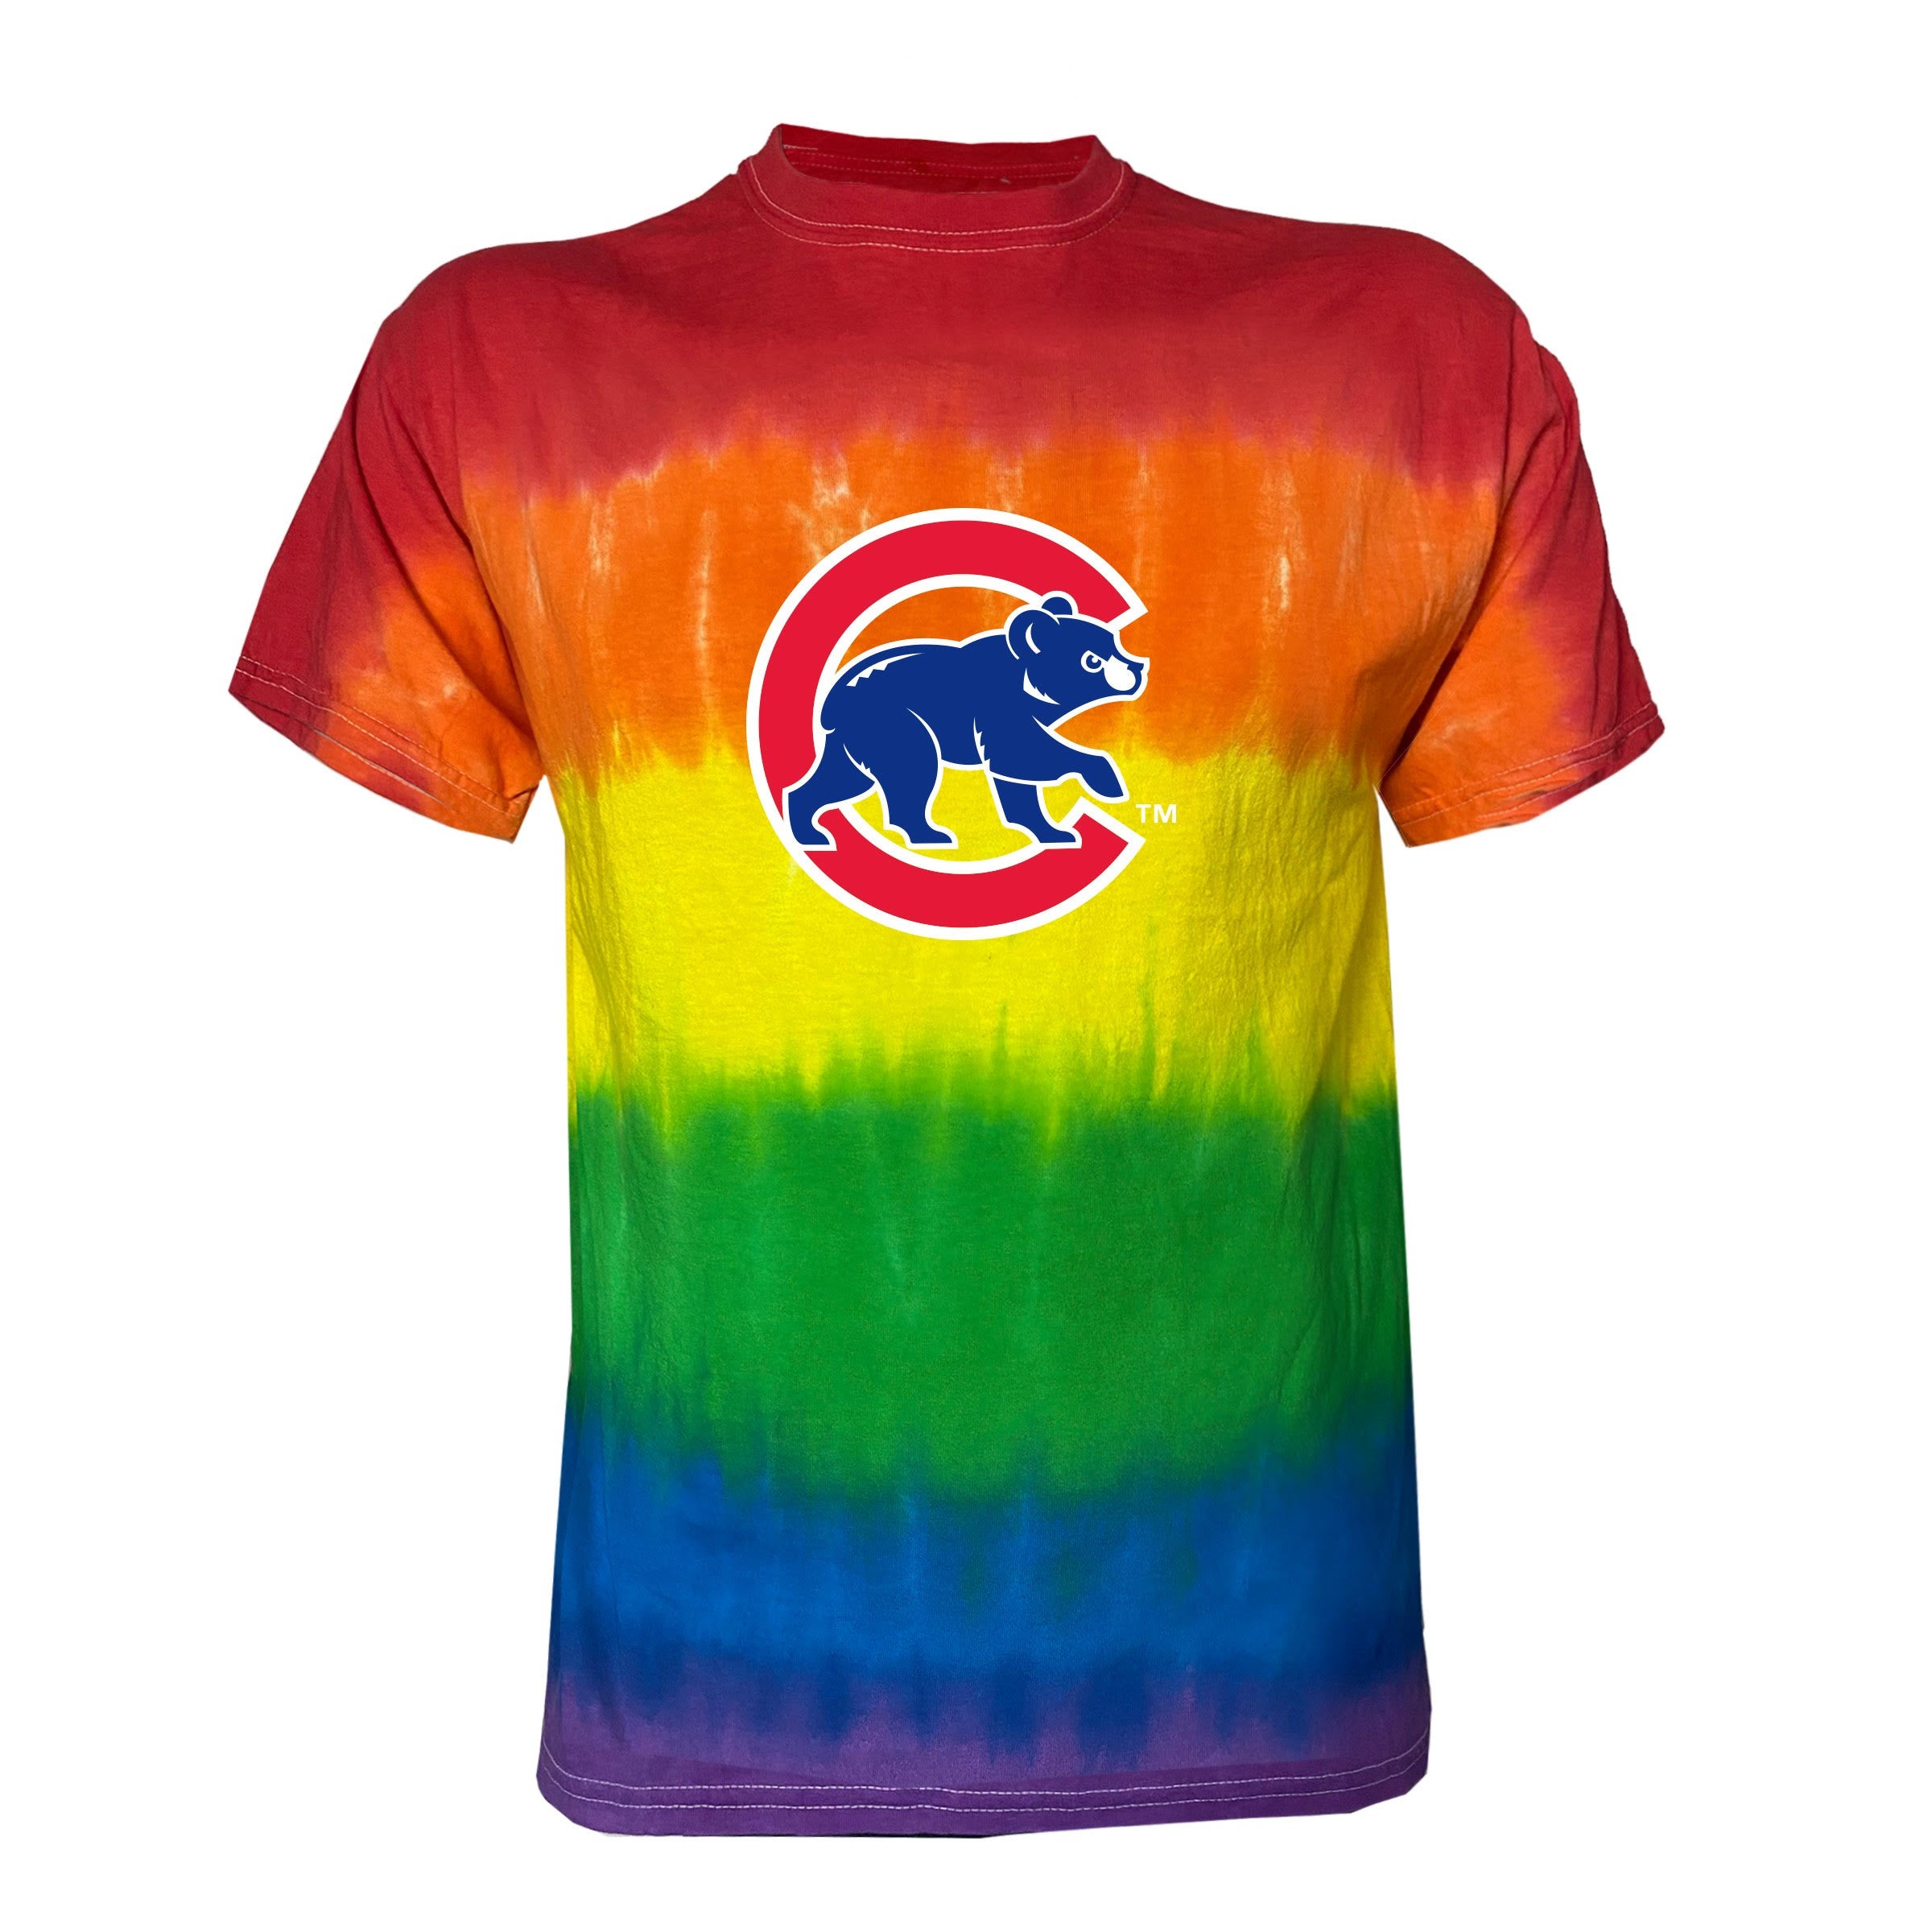 Men's New Era Royal Chicago Cubs Team Tie-Dye T-Shirt, Size: XL, Cub Blue